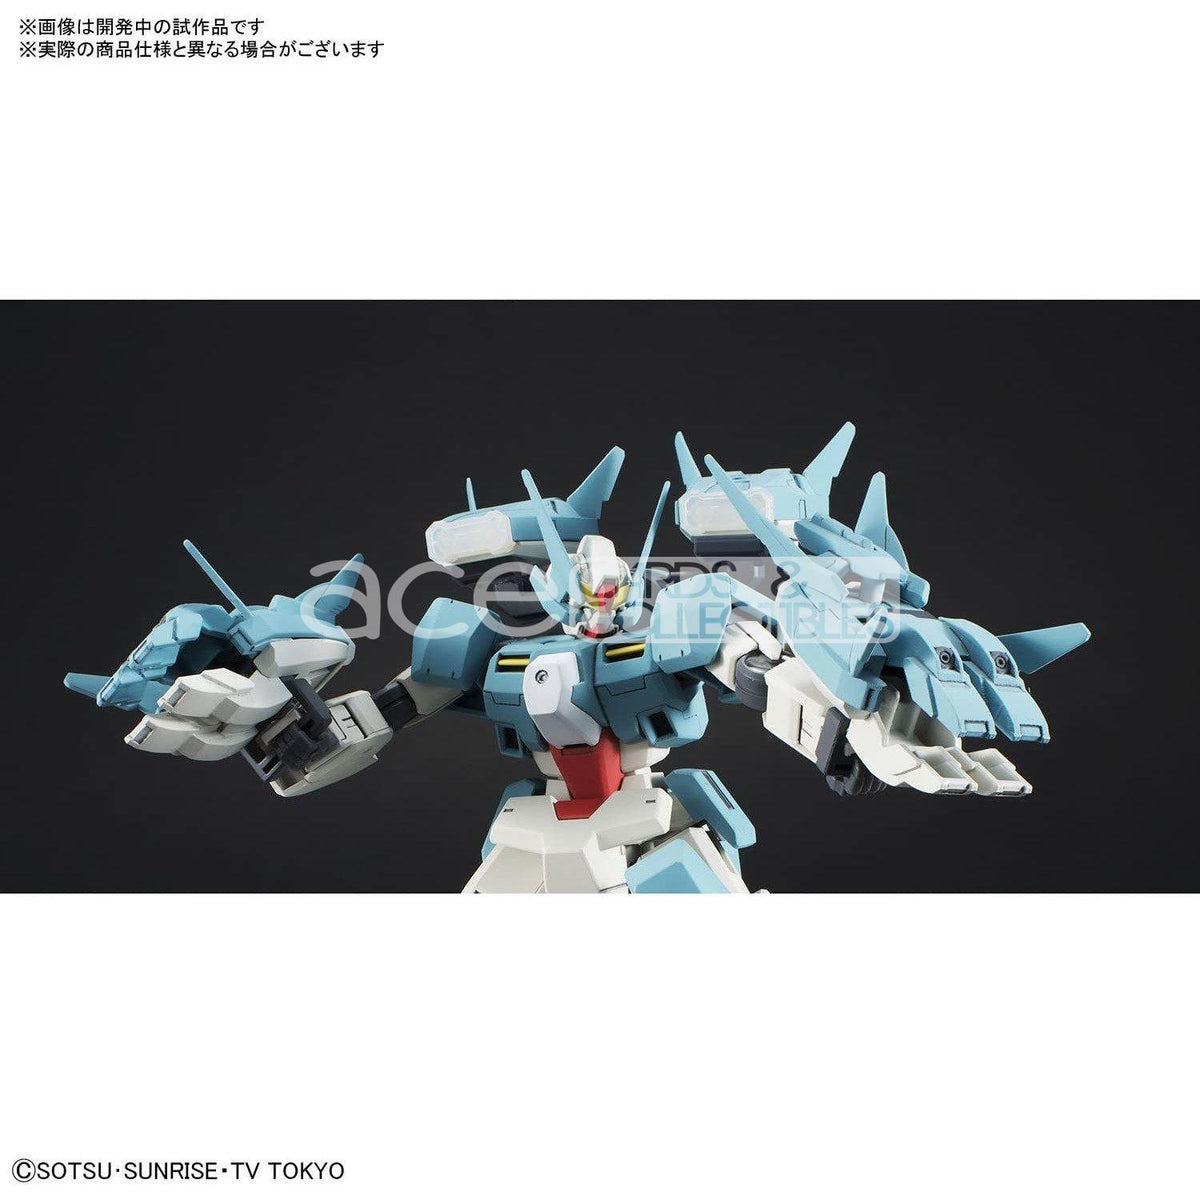 Gunpla HGBD 1/144 Seravee Gundam Scheherazade-Bandai-Ace Cards &amp; Collectibles